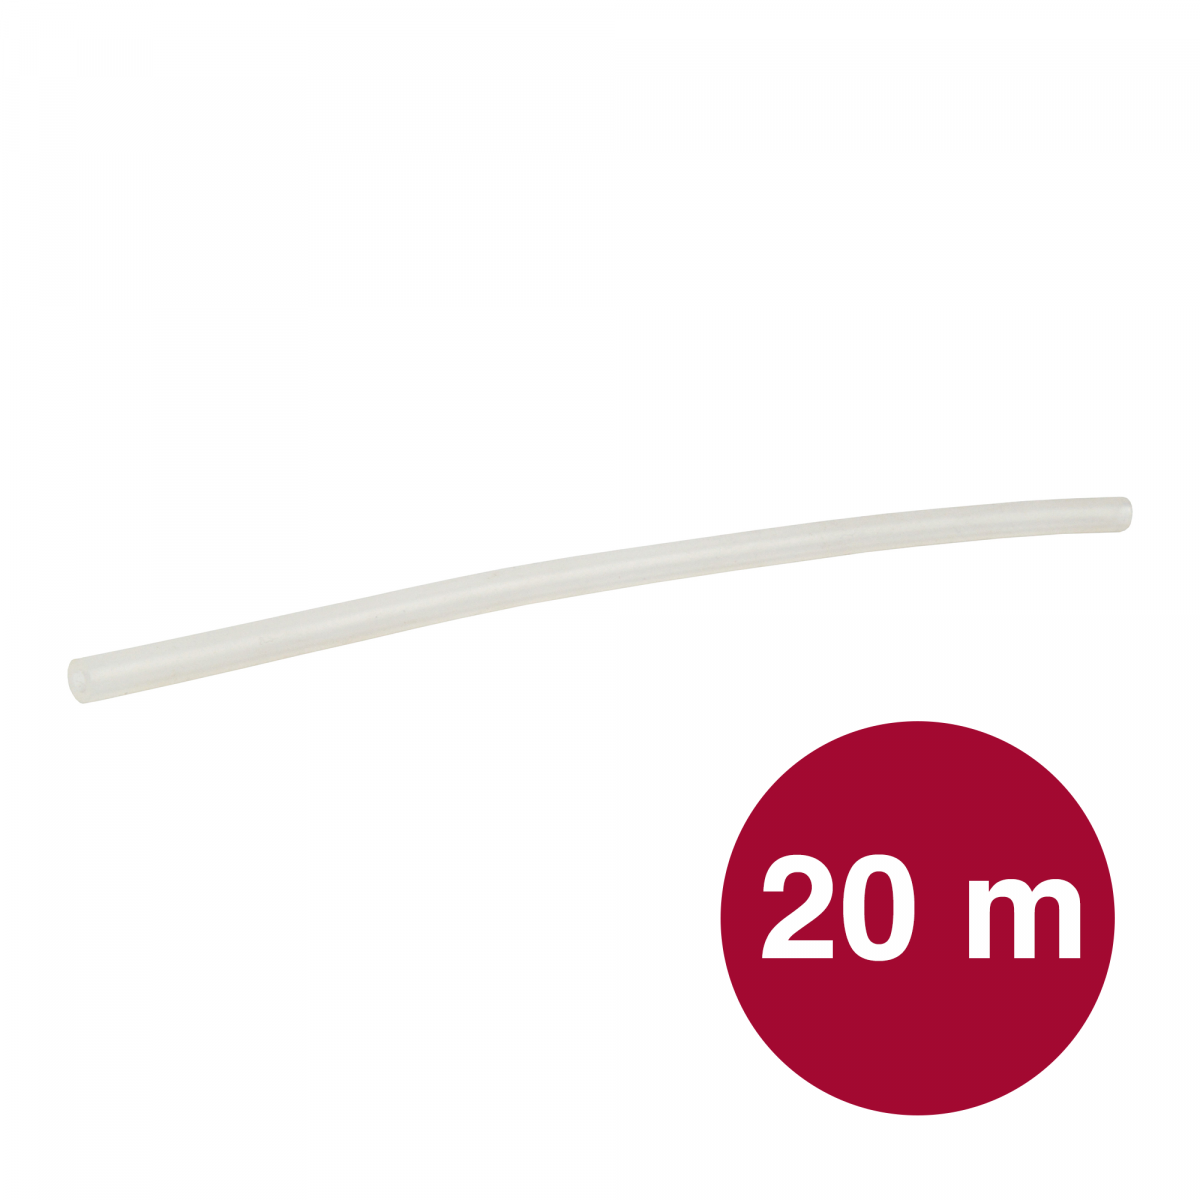 Silicone hose 3 x 6 mm per 20 metres